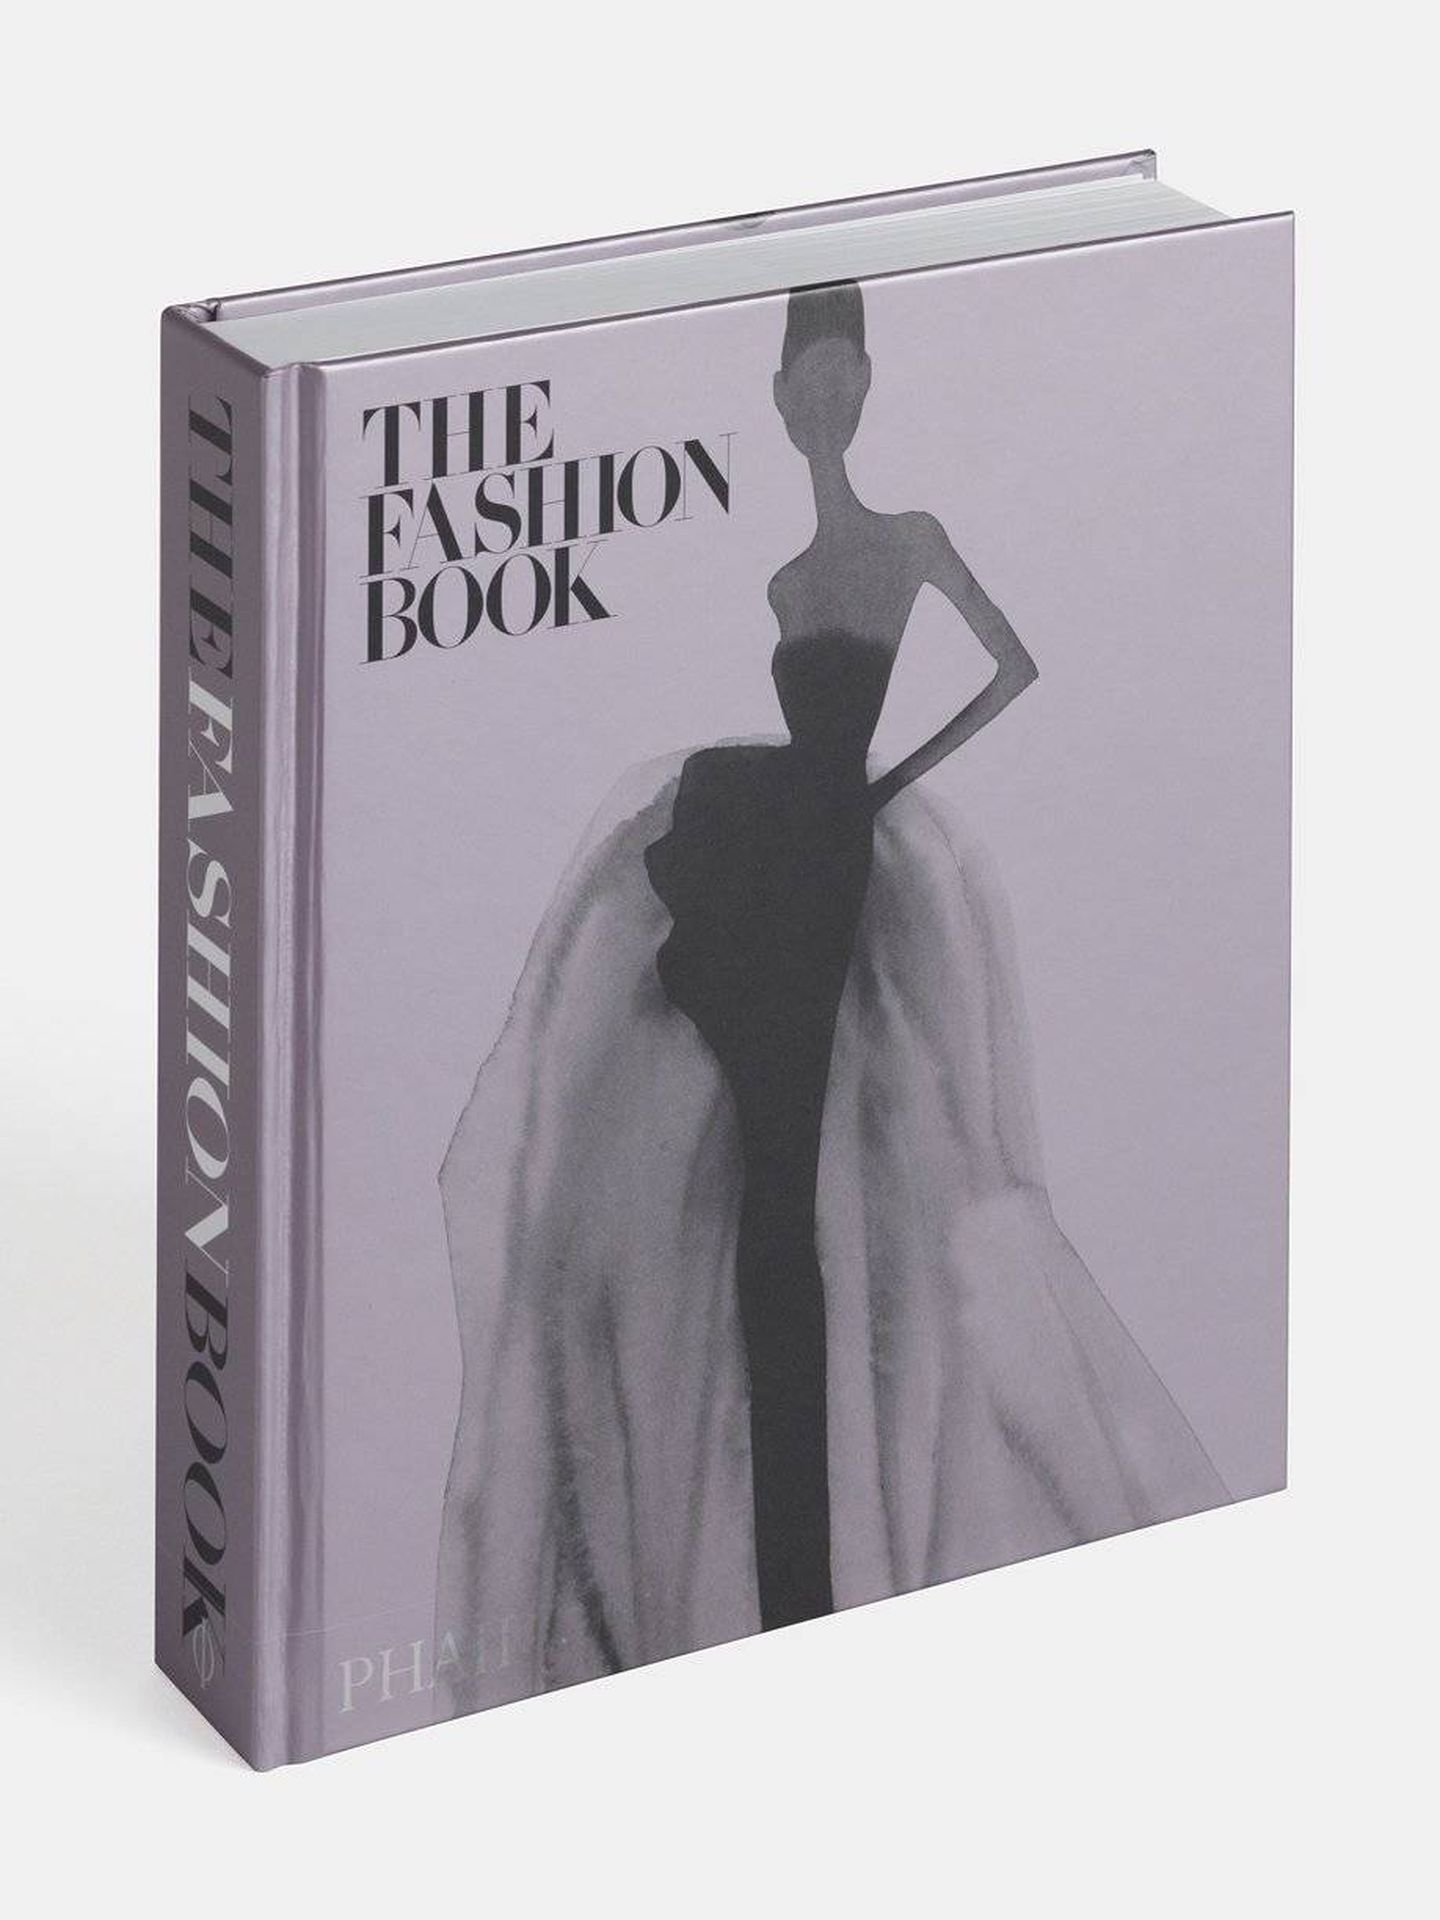 El libro 'The Fashion Book', Ed. Phaidon. (Cortesía)